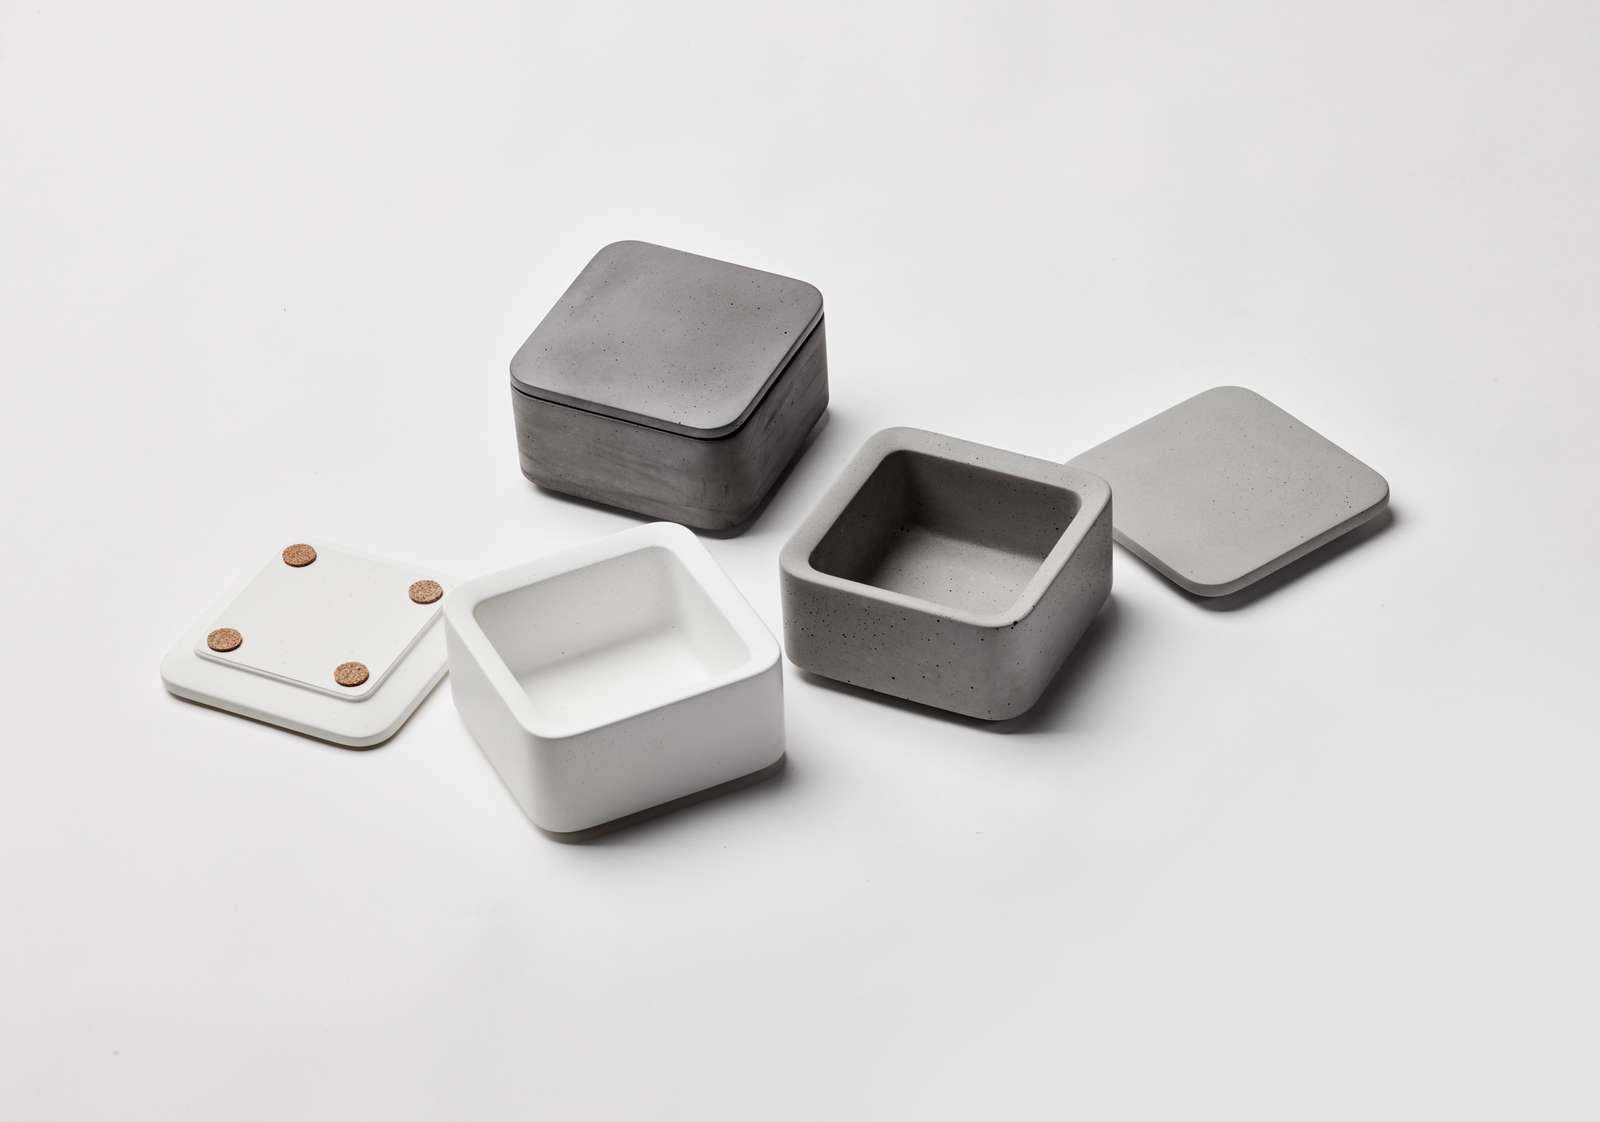 KARIN box, beton, small, grå